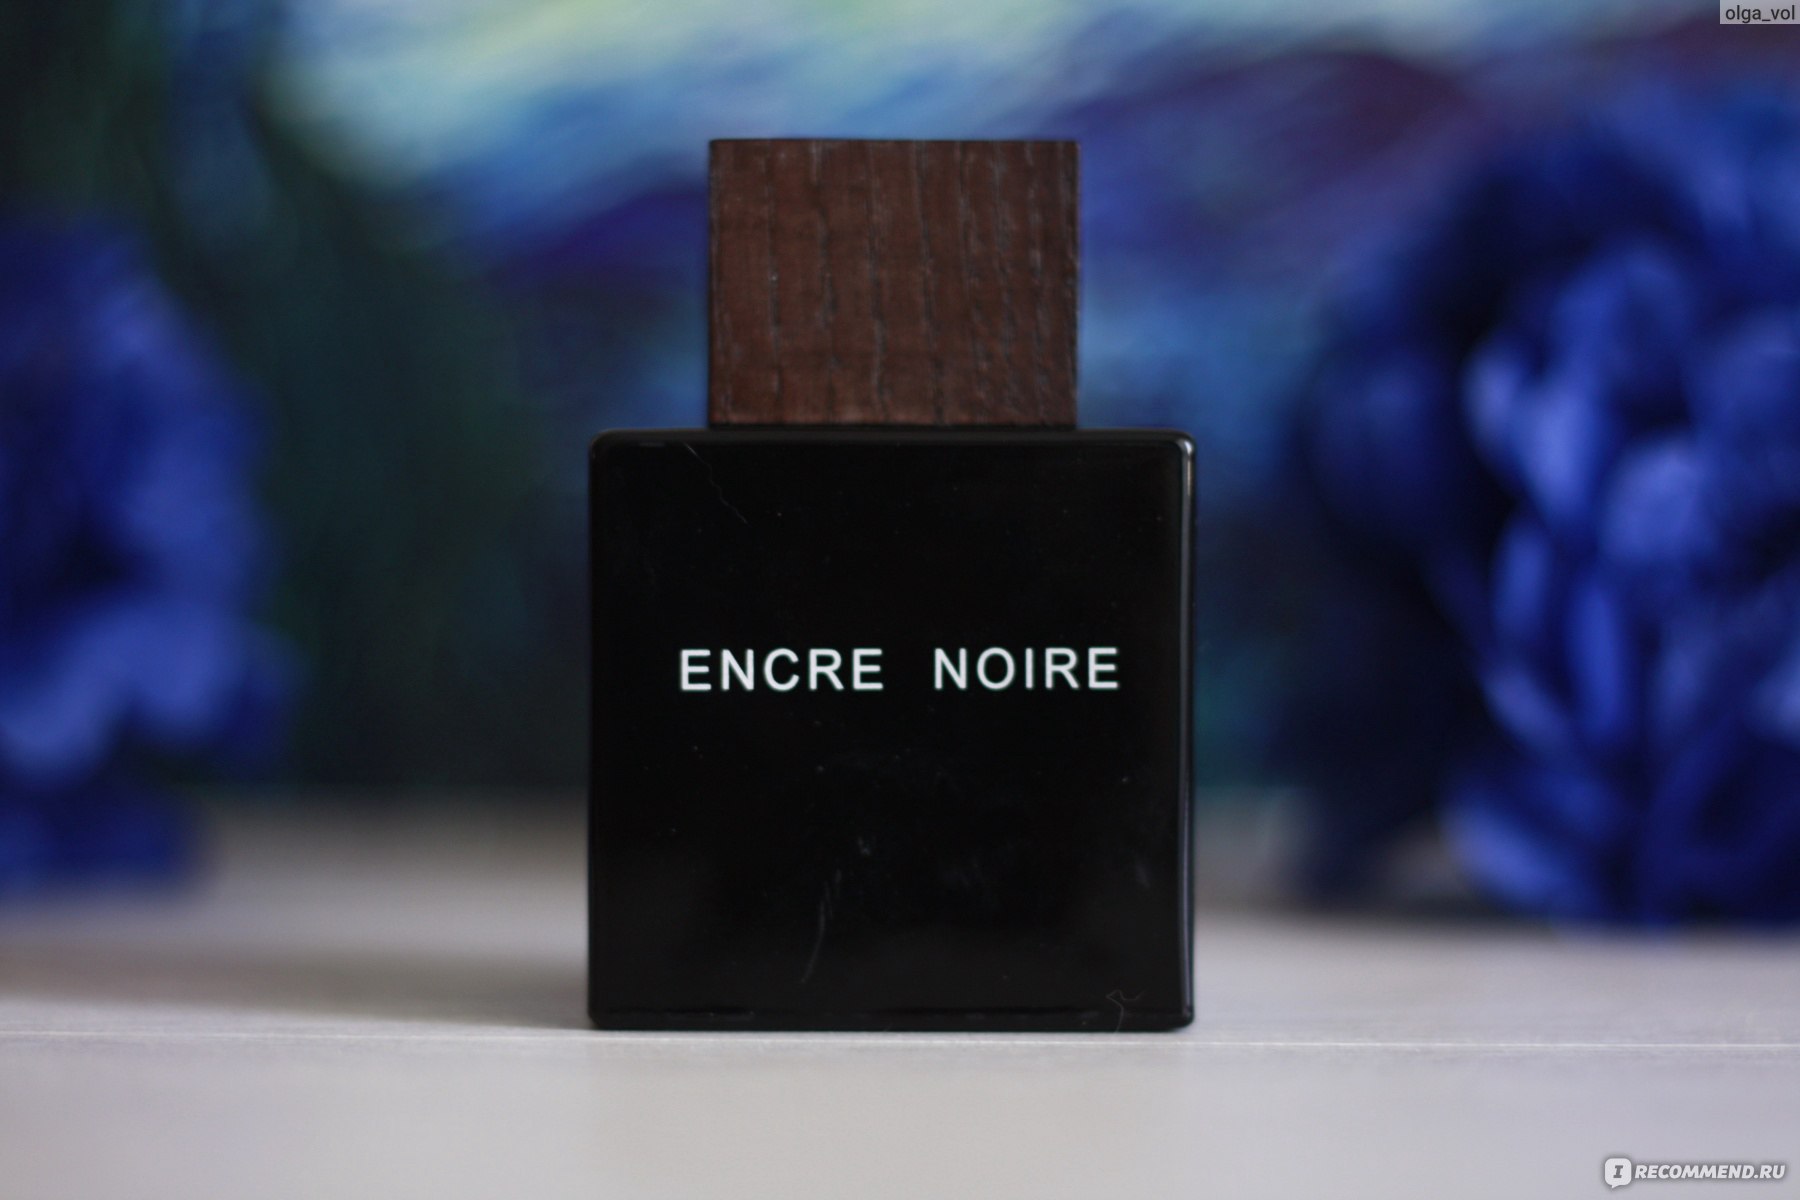 Здравствуйте у вас есть автопарфюм Lalique encre noire?